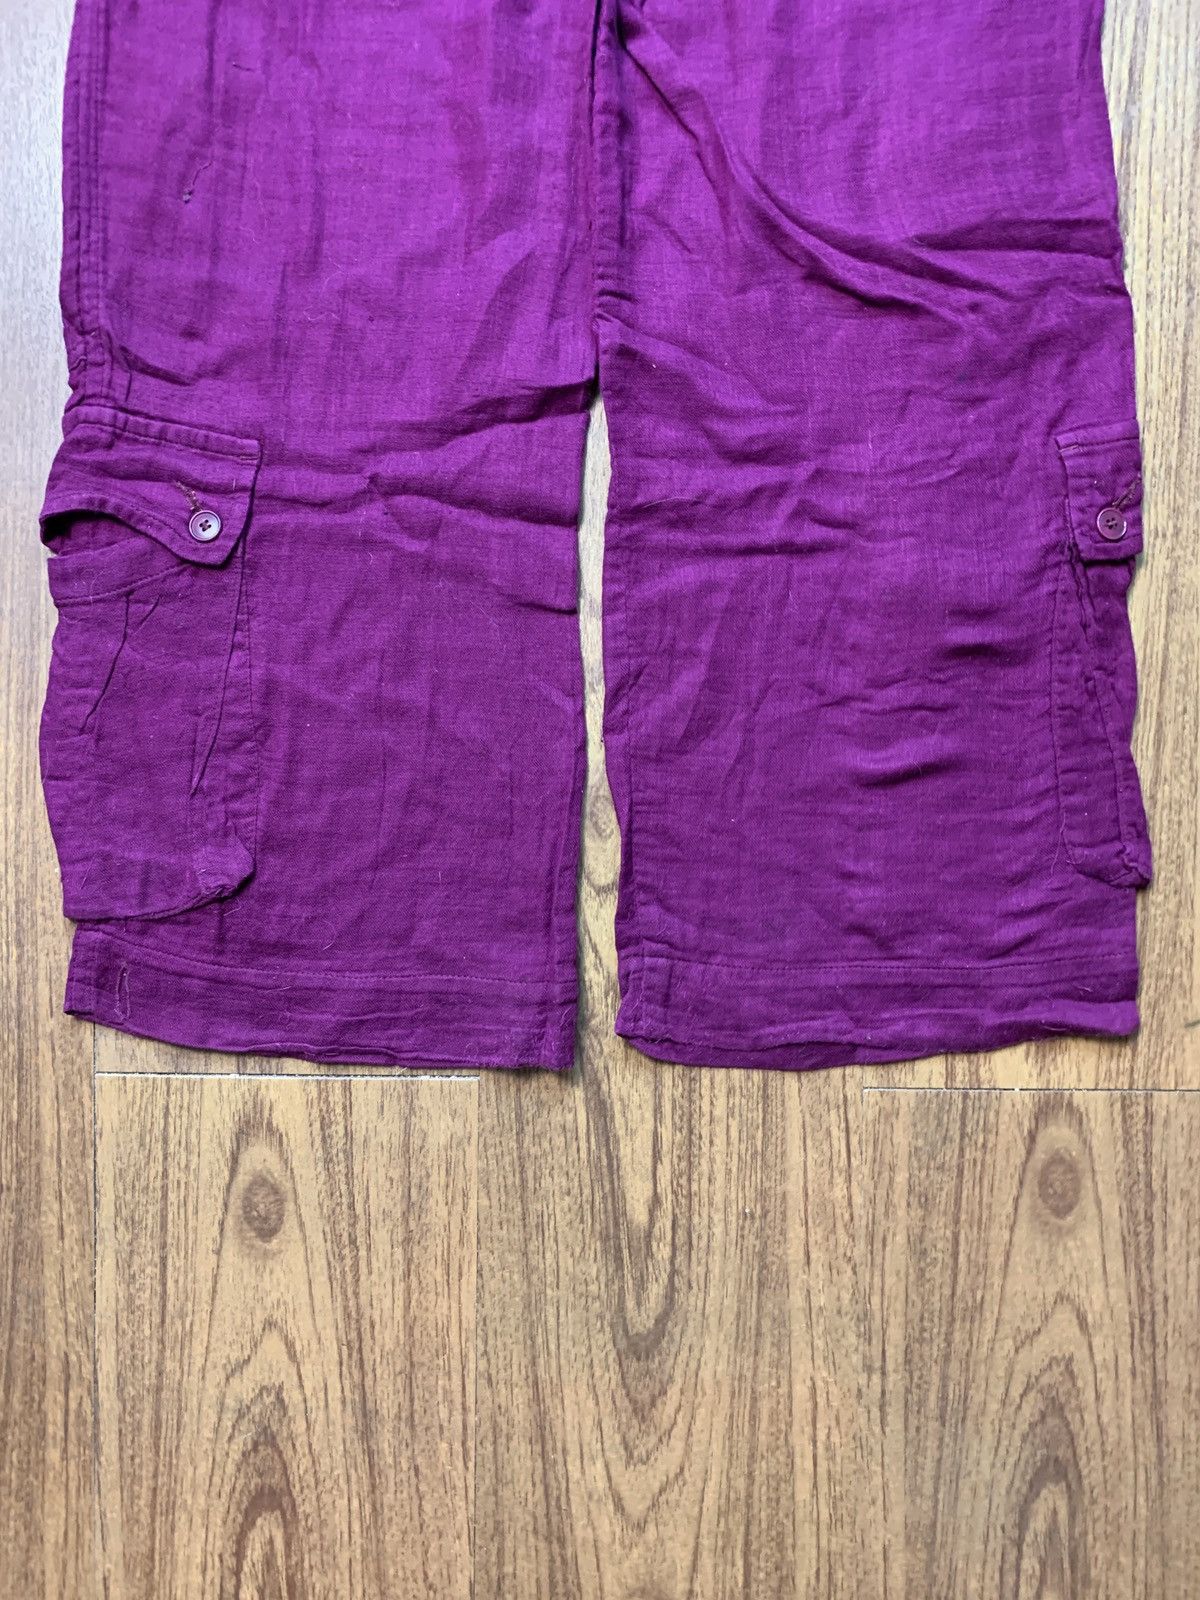 Issey Miyake Multi Pocket Light Cotton Cargo Pants Size US 32 / EU 48 - 8 Thumbnail